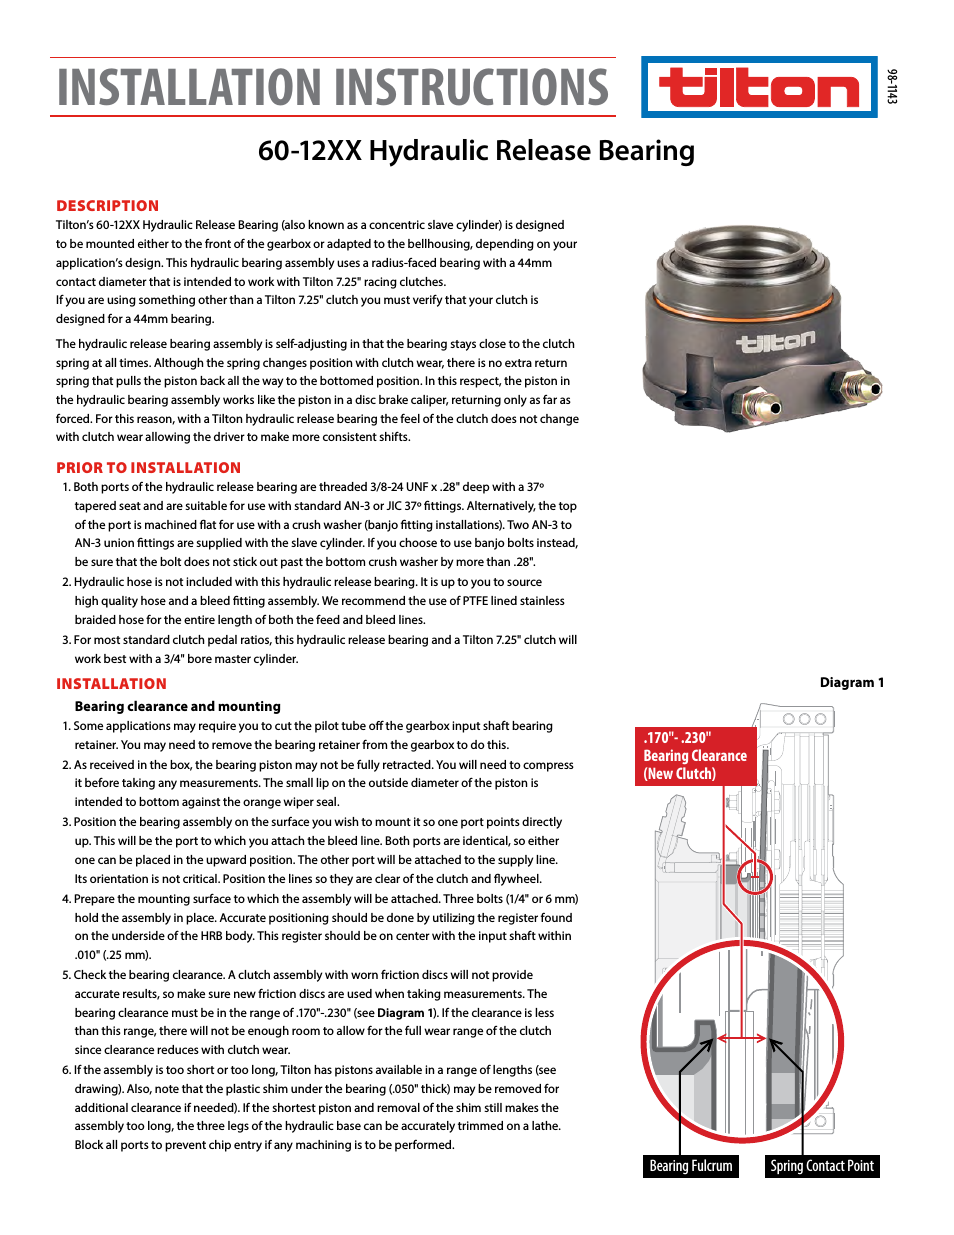 12XX Hydraulic Release Bearing (98-1143)